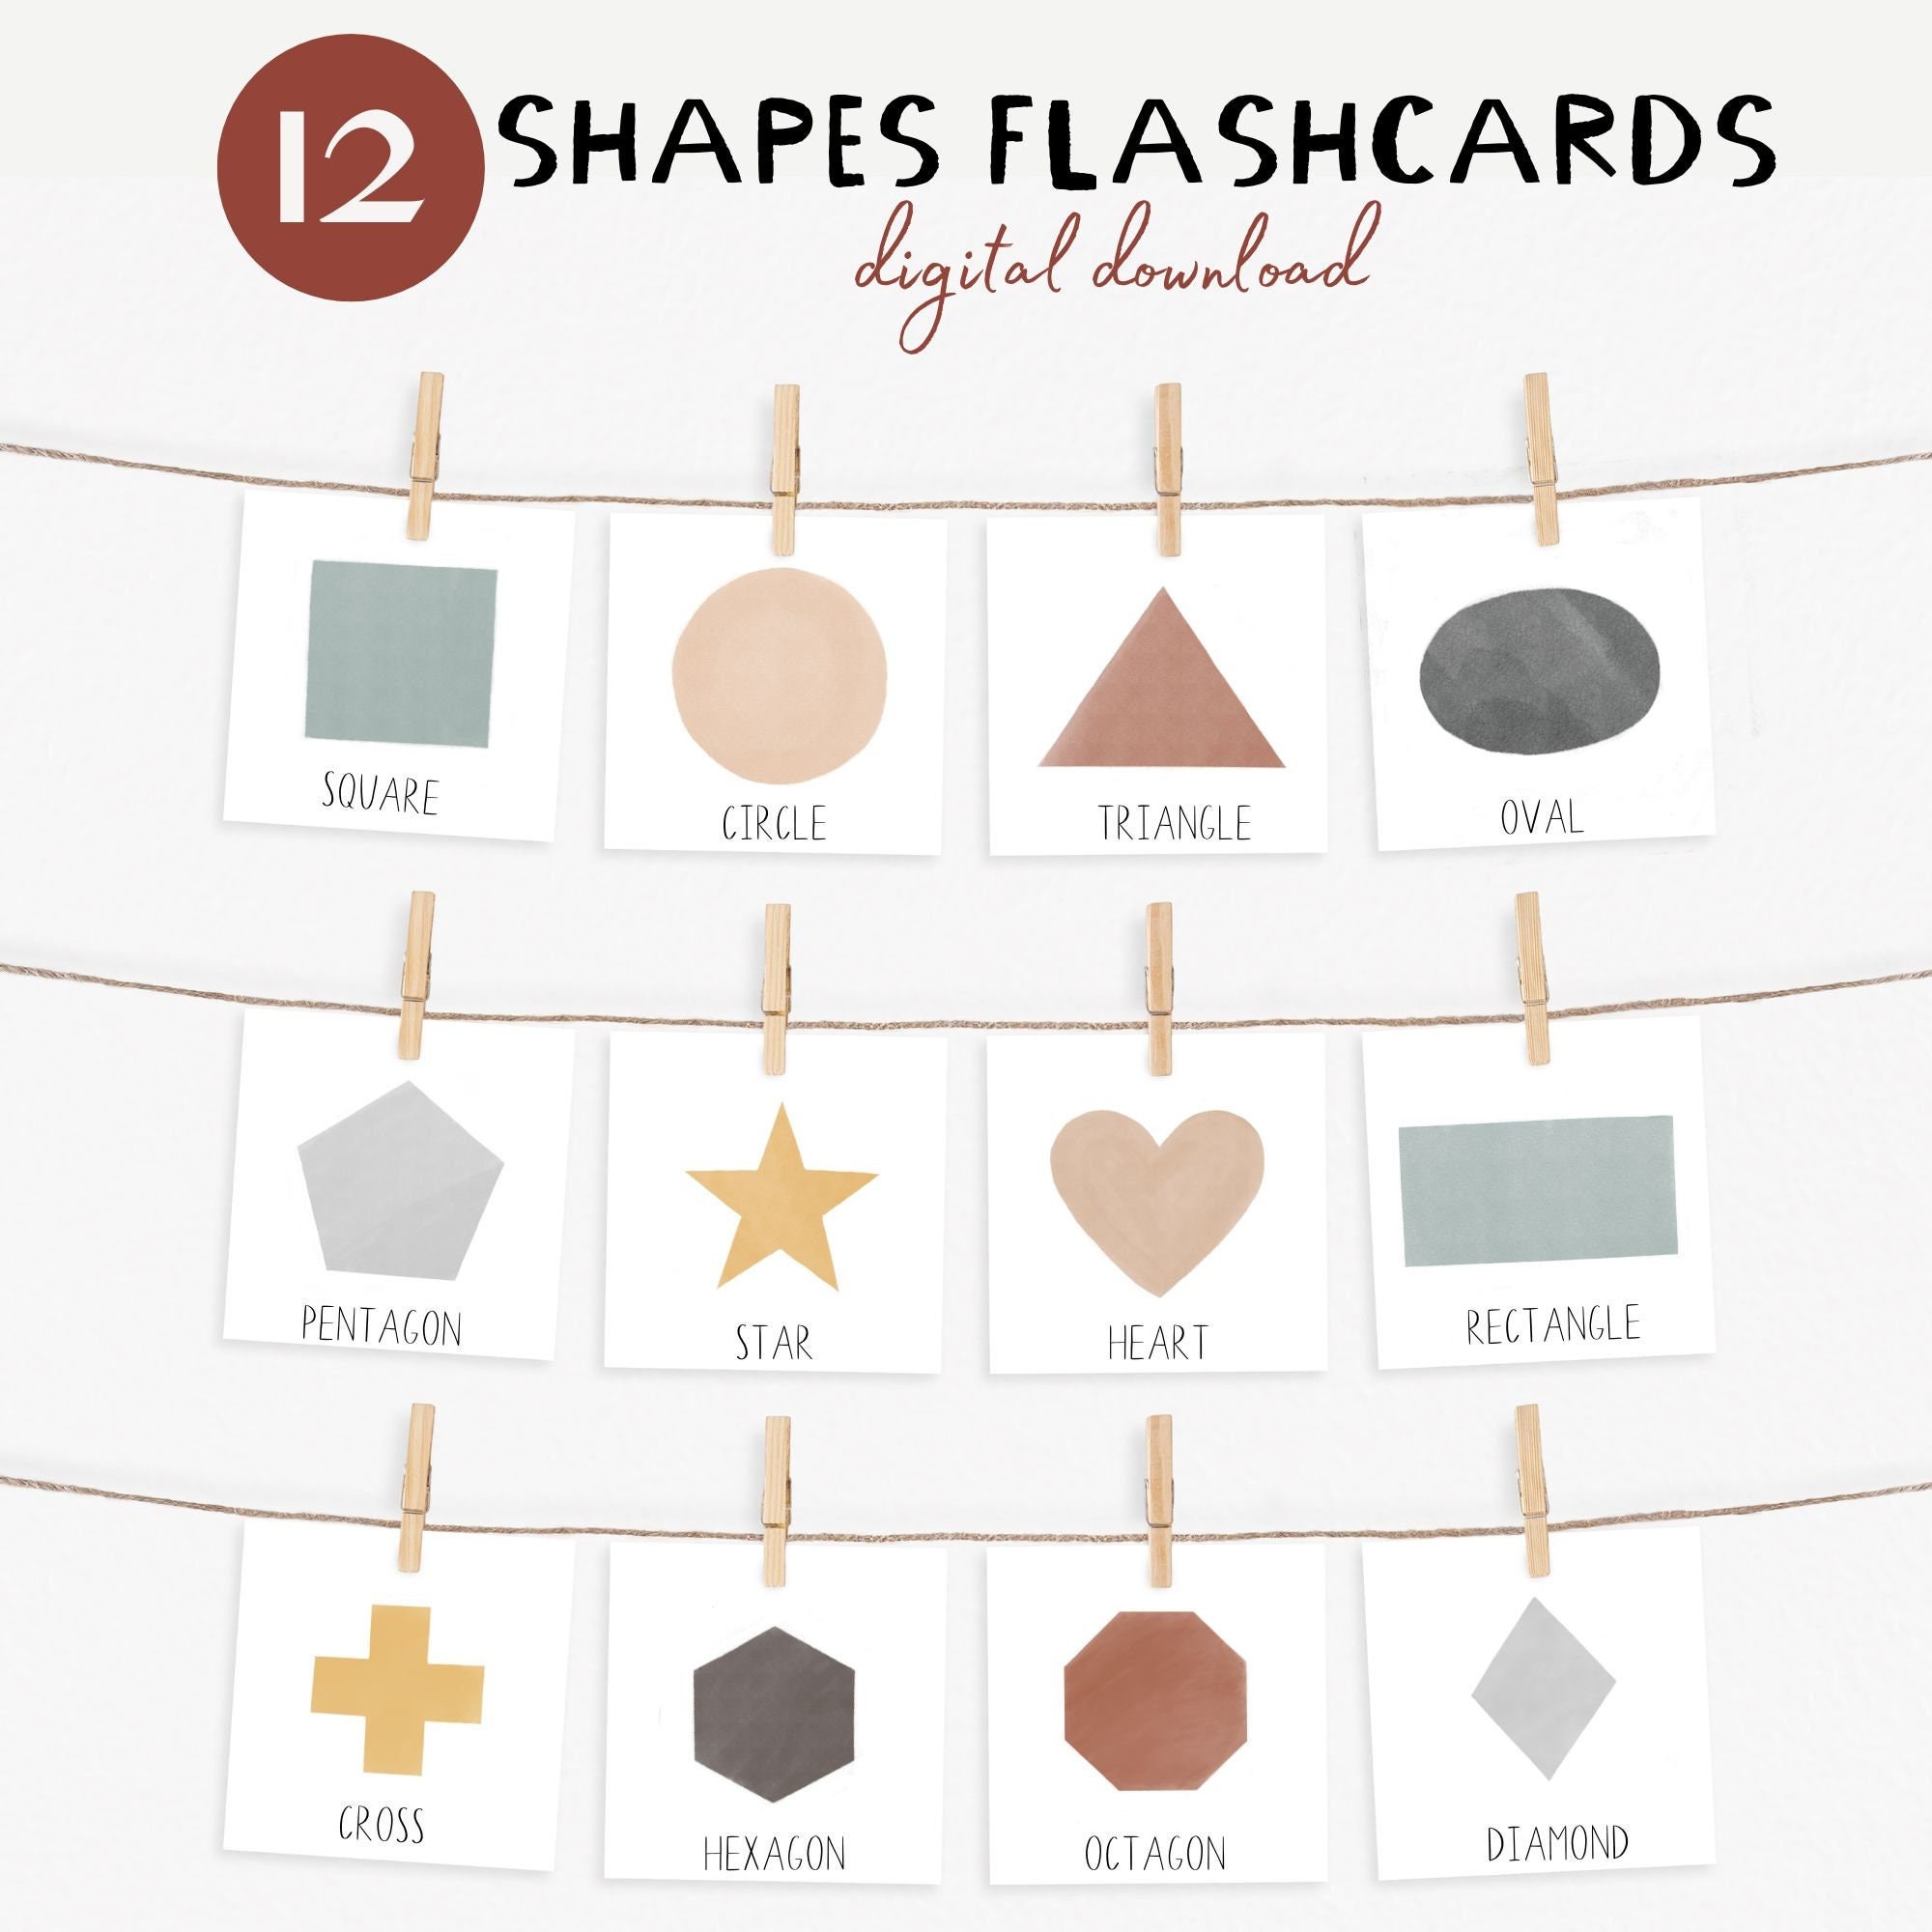 Geometry Shapes Flashcards